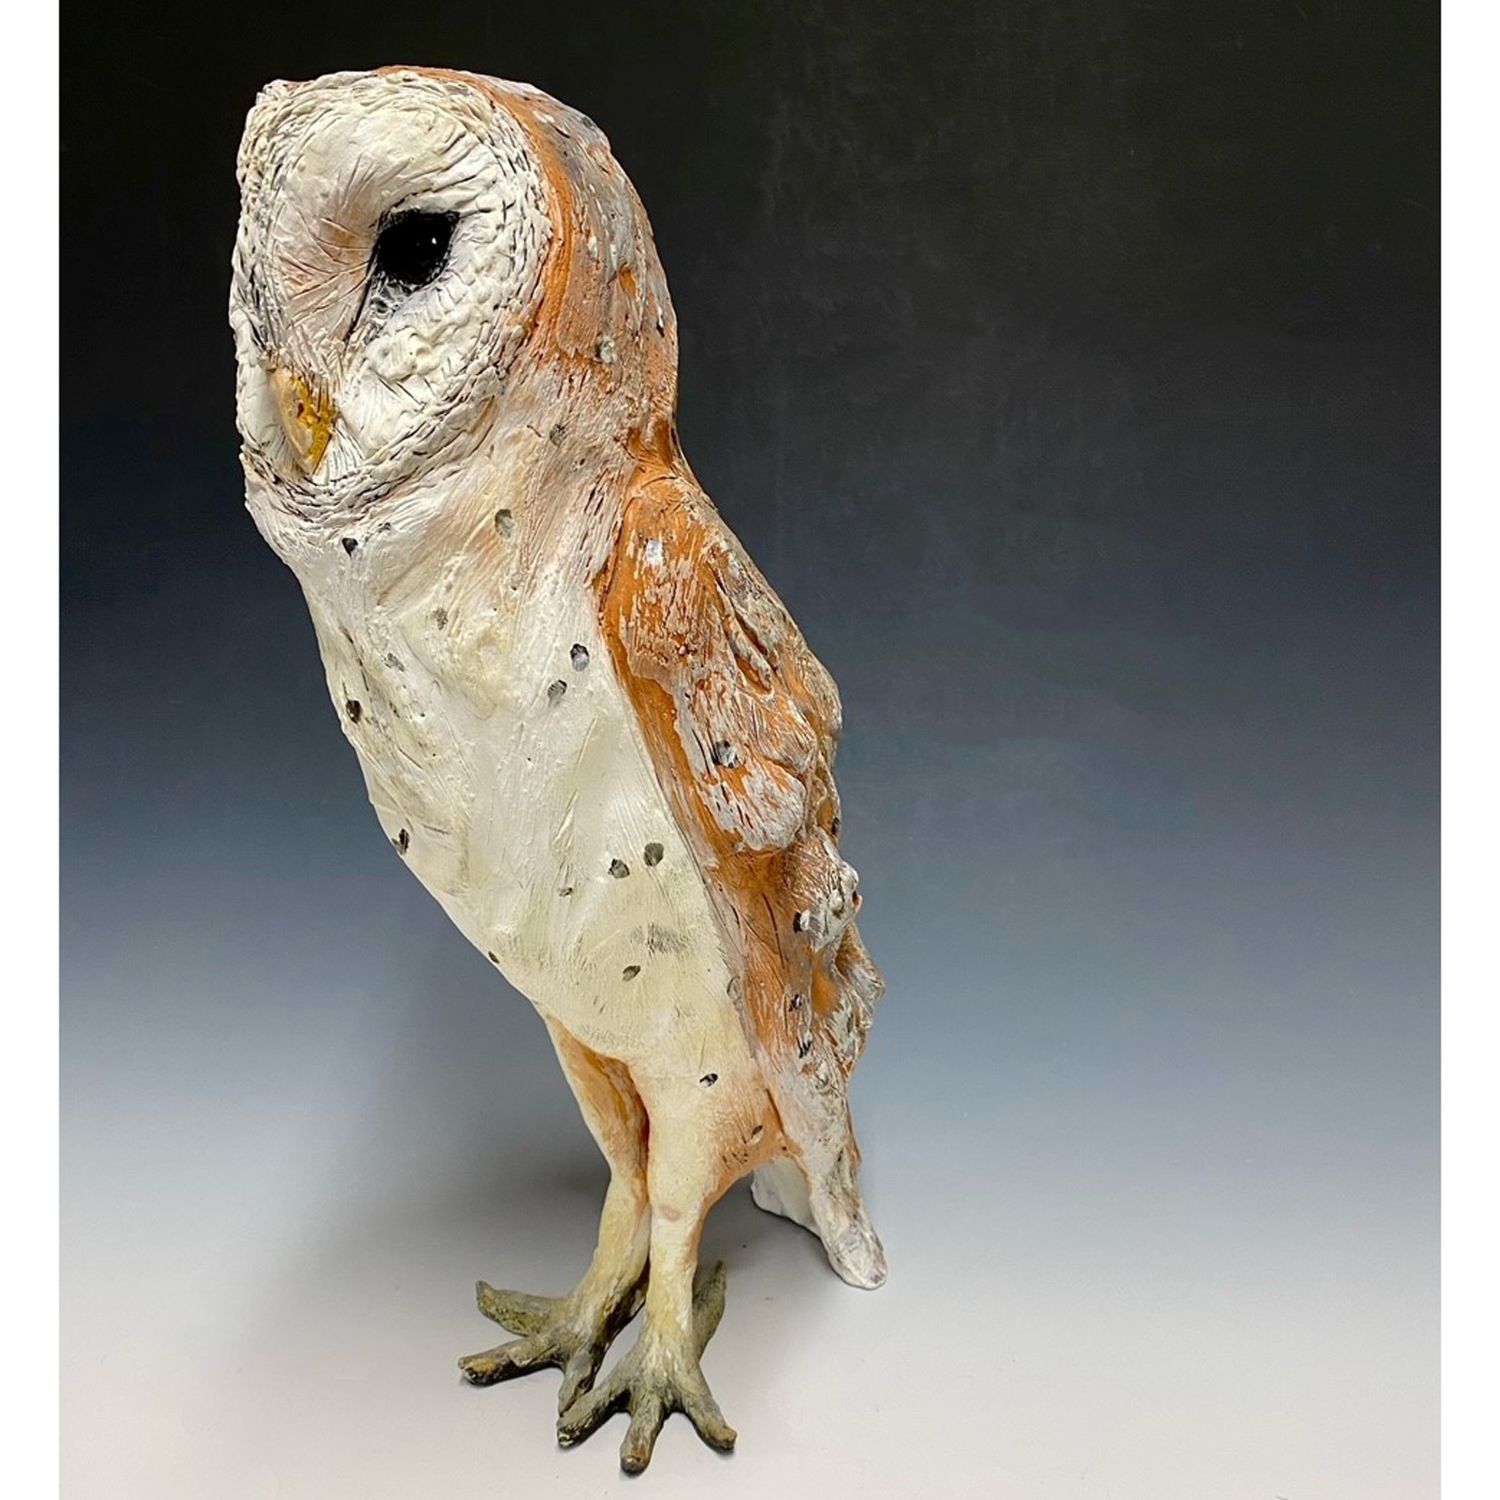 Mary Philpott: Barn Owl Product Image 2 of 2